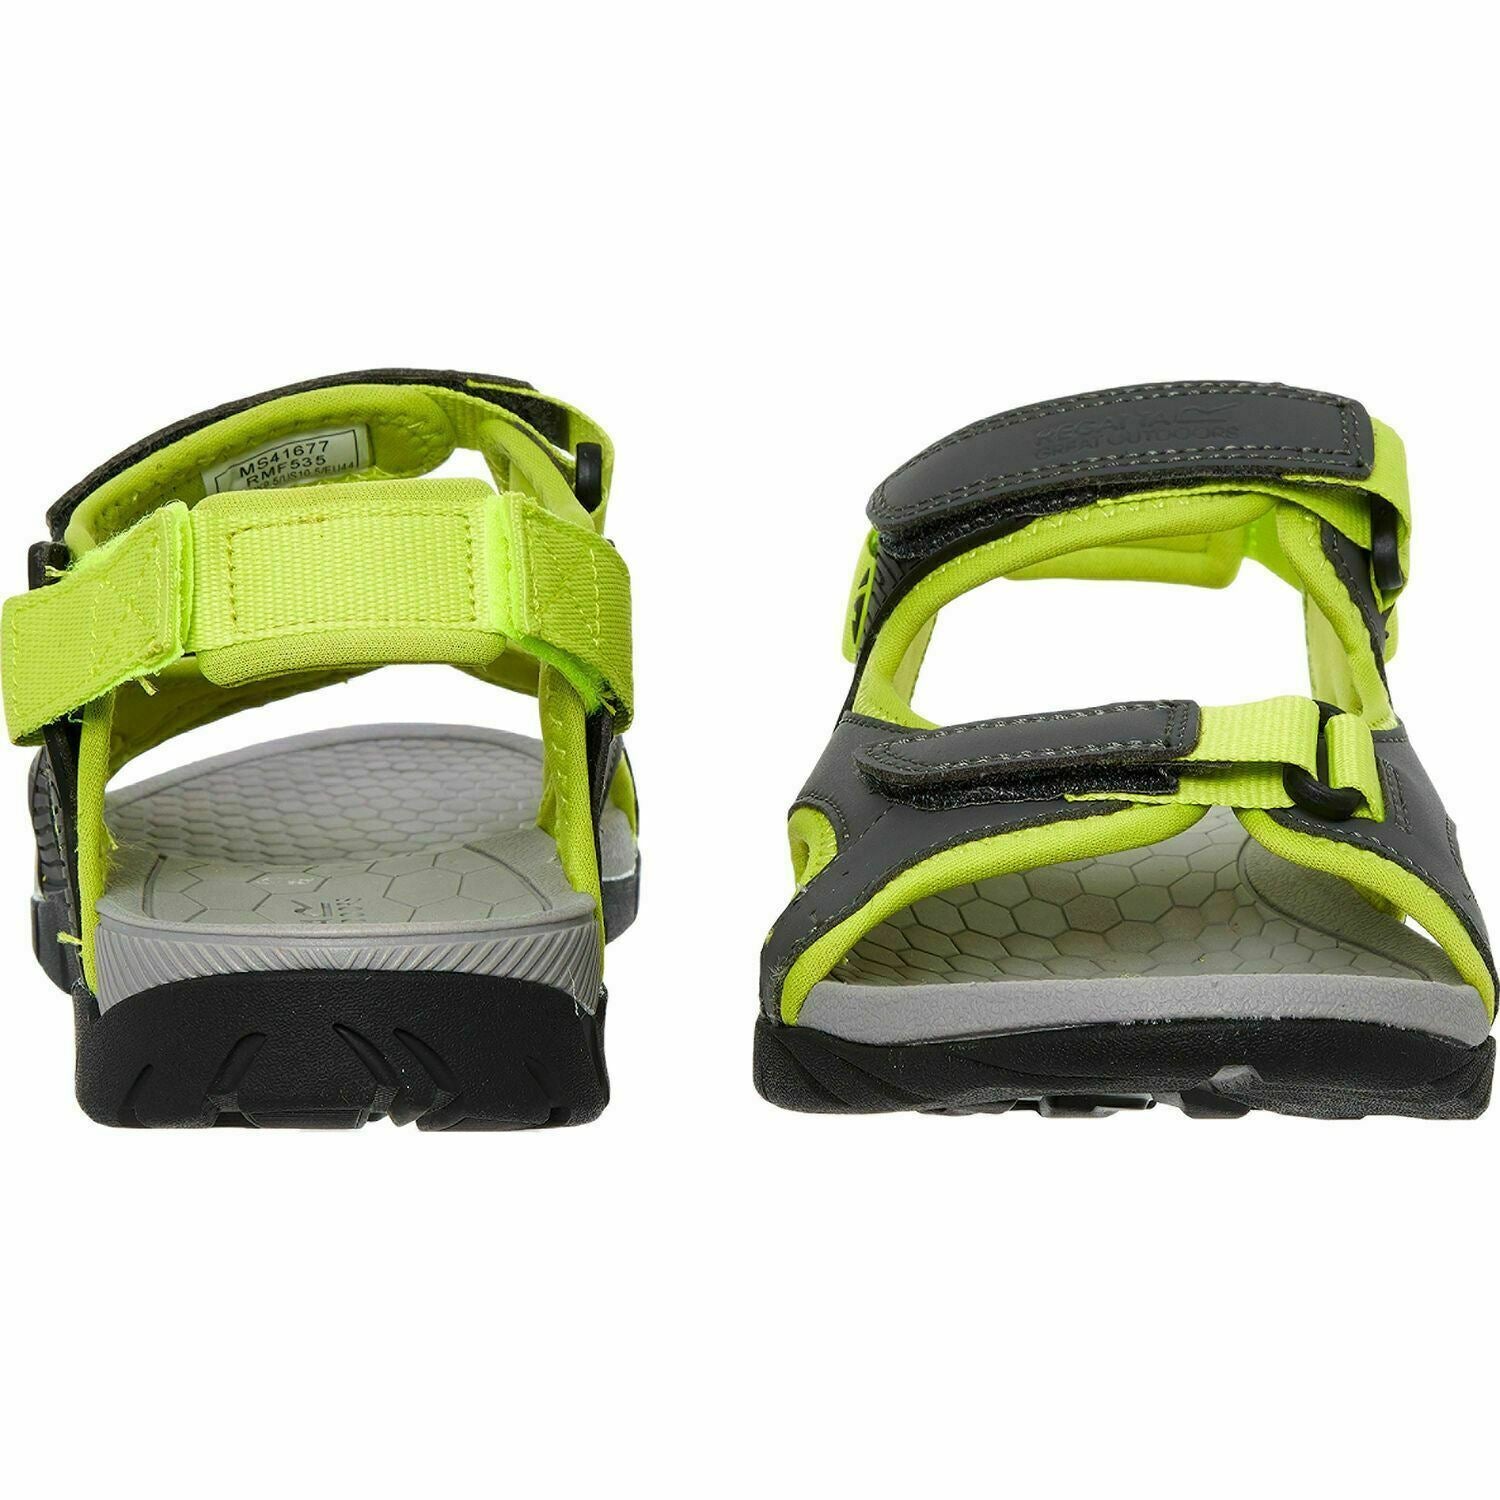 REGATTA Men's RAFTA Sport Sandals, Granite/Lime Punch, size UK 9.5 EU 44